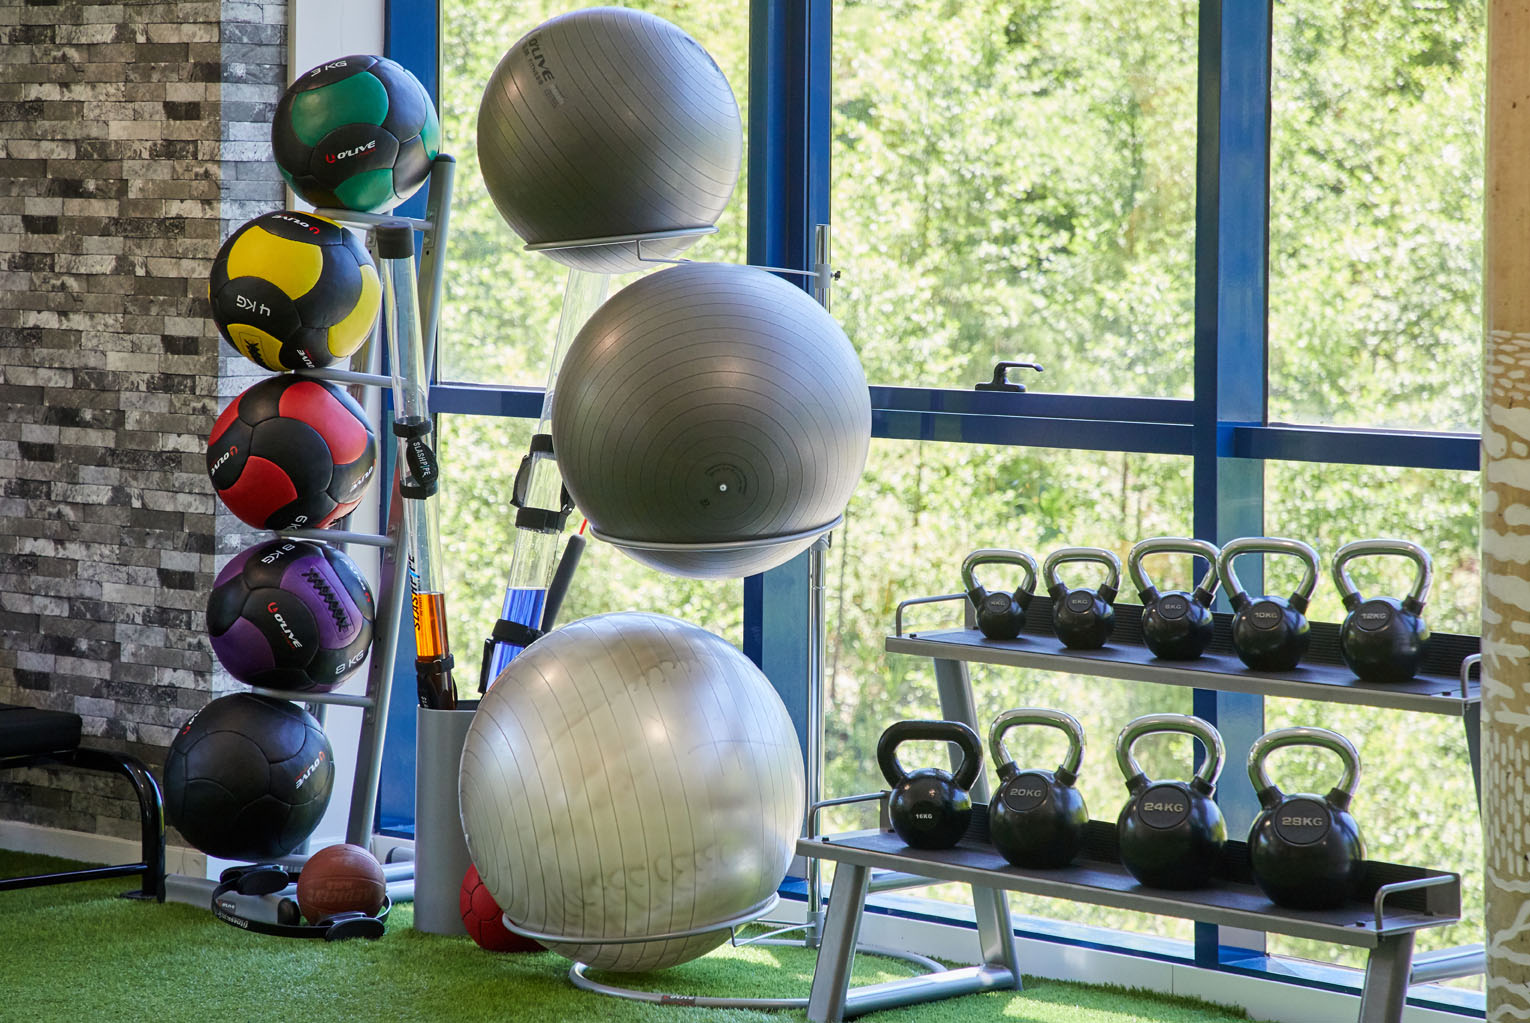 instalaciones-osasun-sport-materiales-fitball-pesas-kettlebell